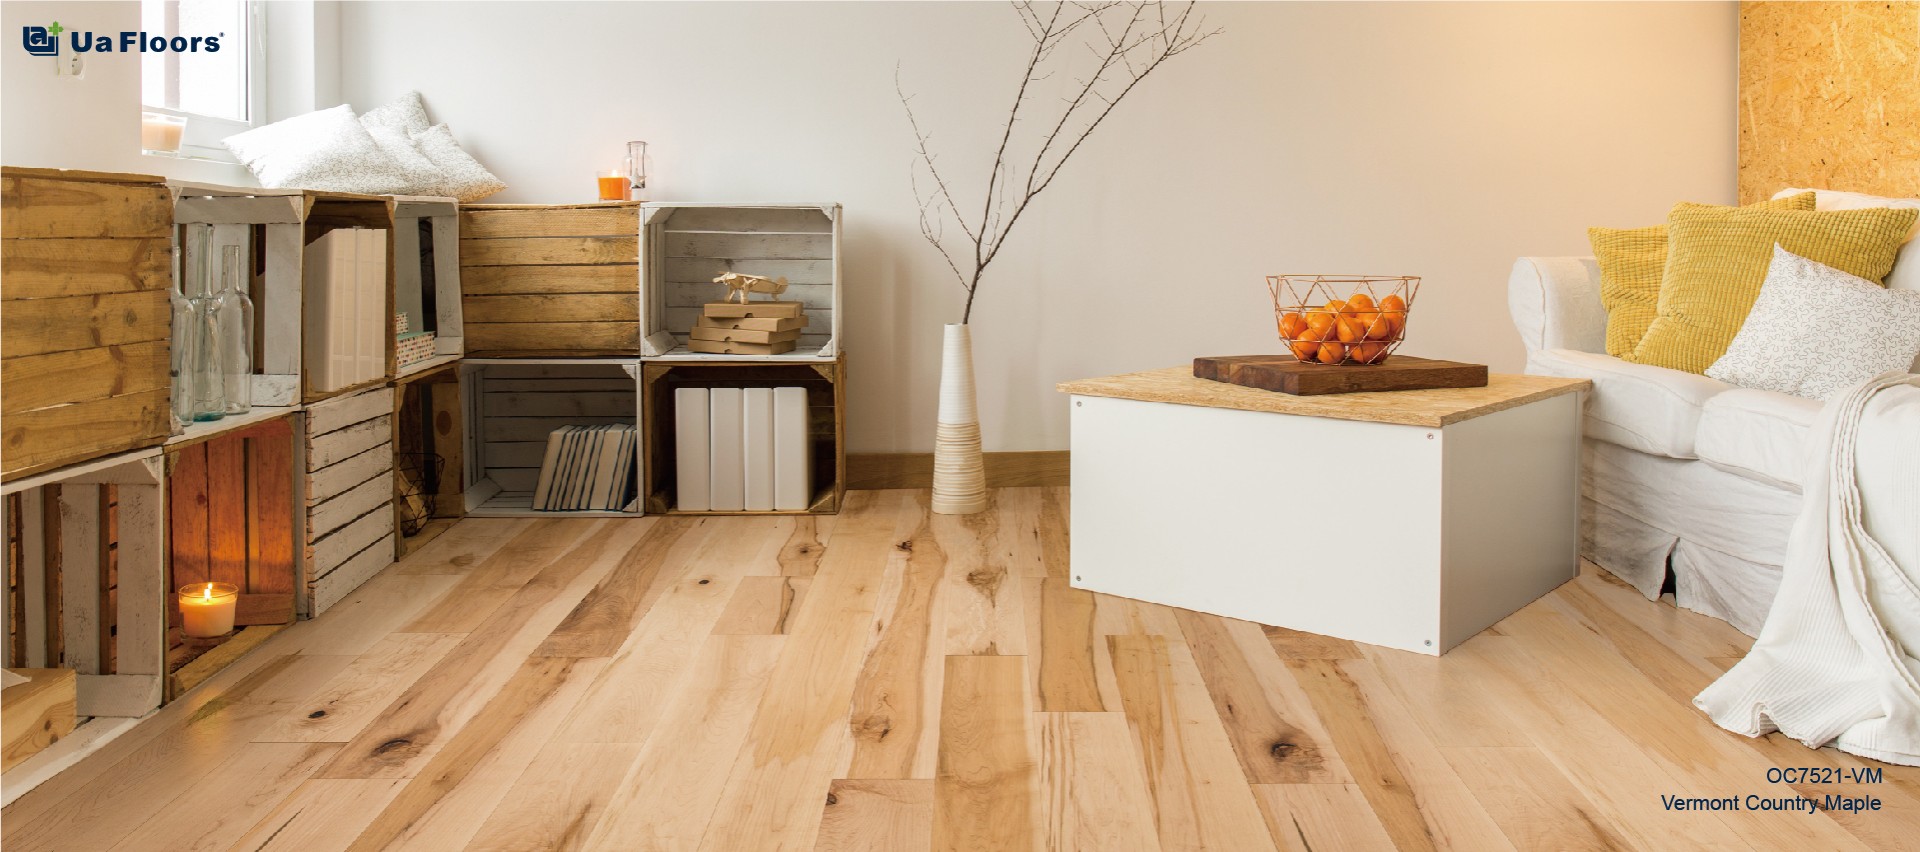 Stylish And Durable Maple Engineered, Contemporary Hardwood Floors